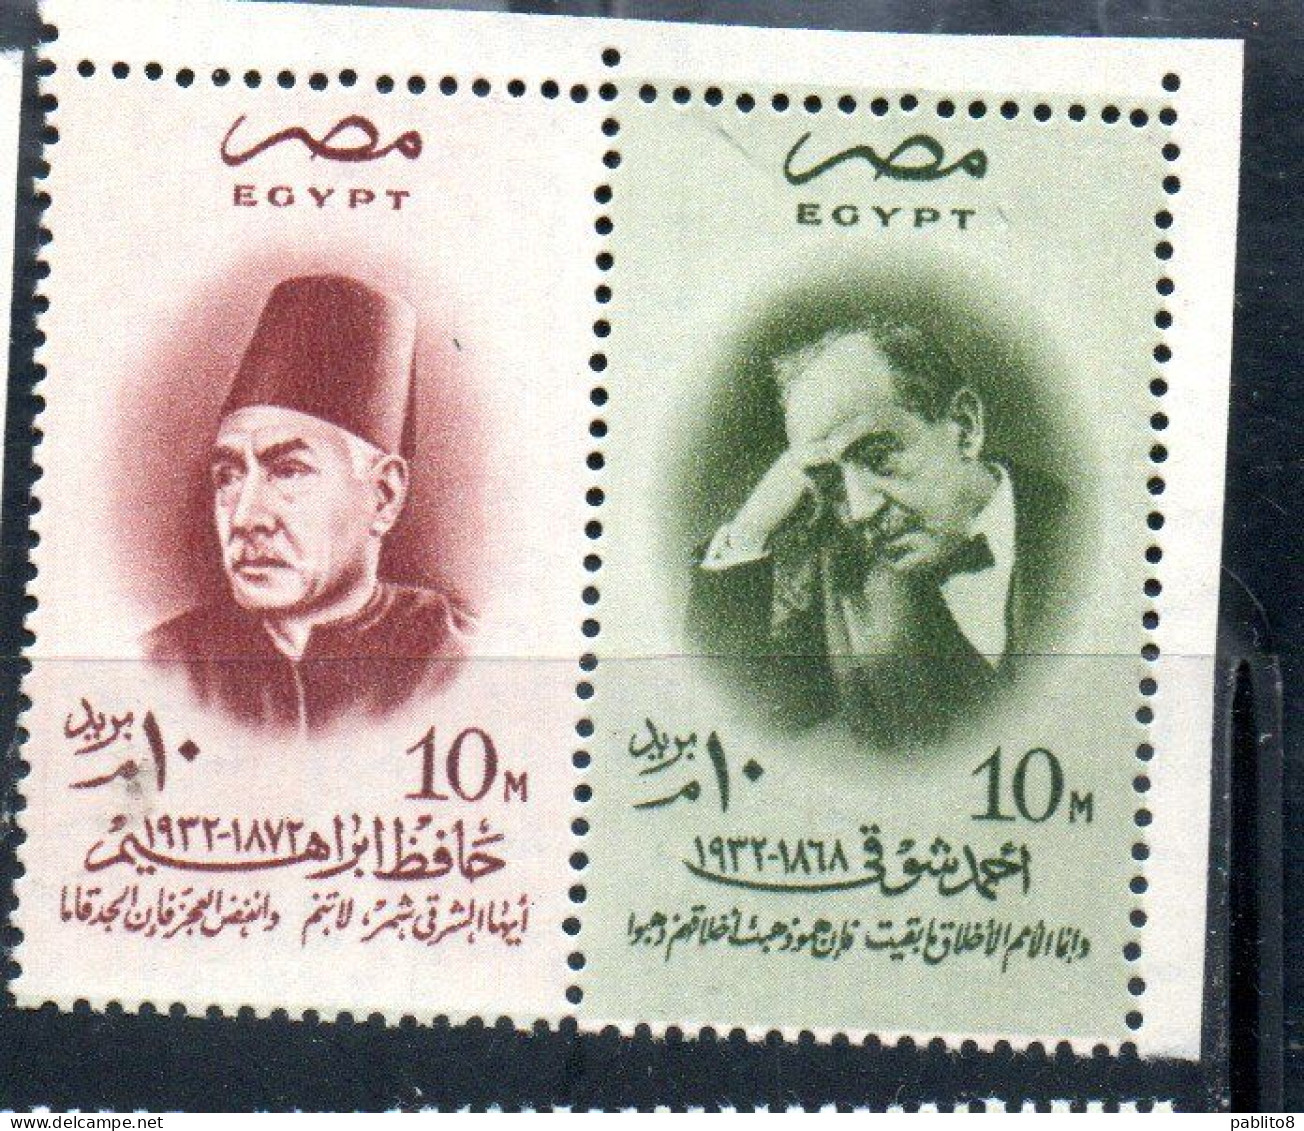 UAR EGYPT EGITTO 1957 HAFEZ IBRAHIM AND AHMED SHAWKY POETS MNH - Unused Stamps